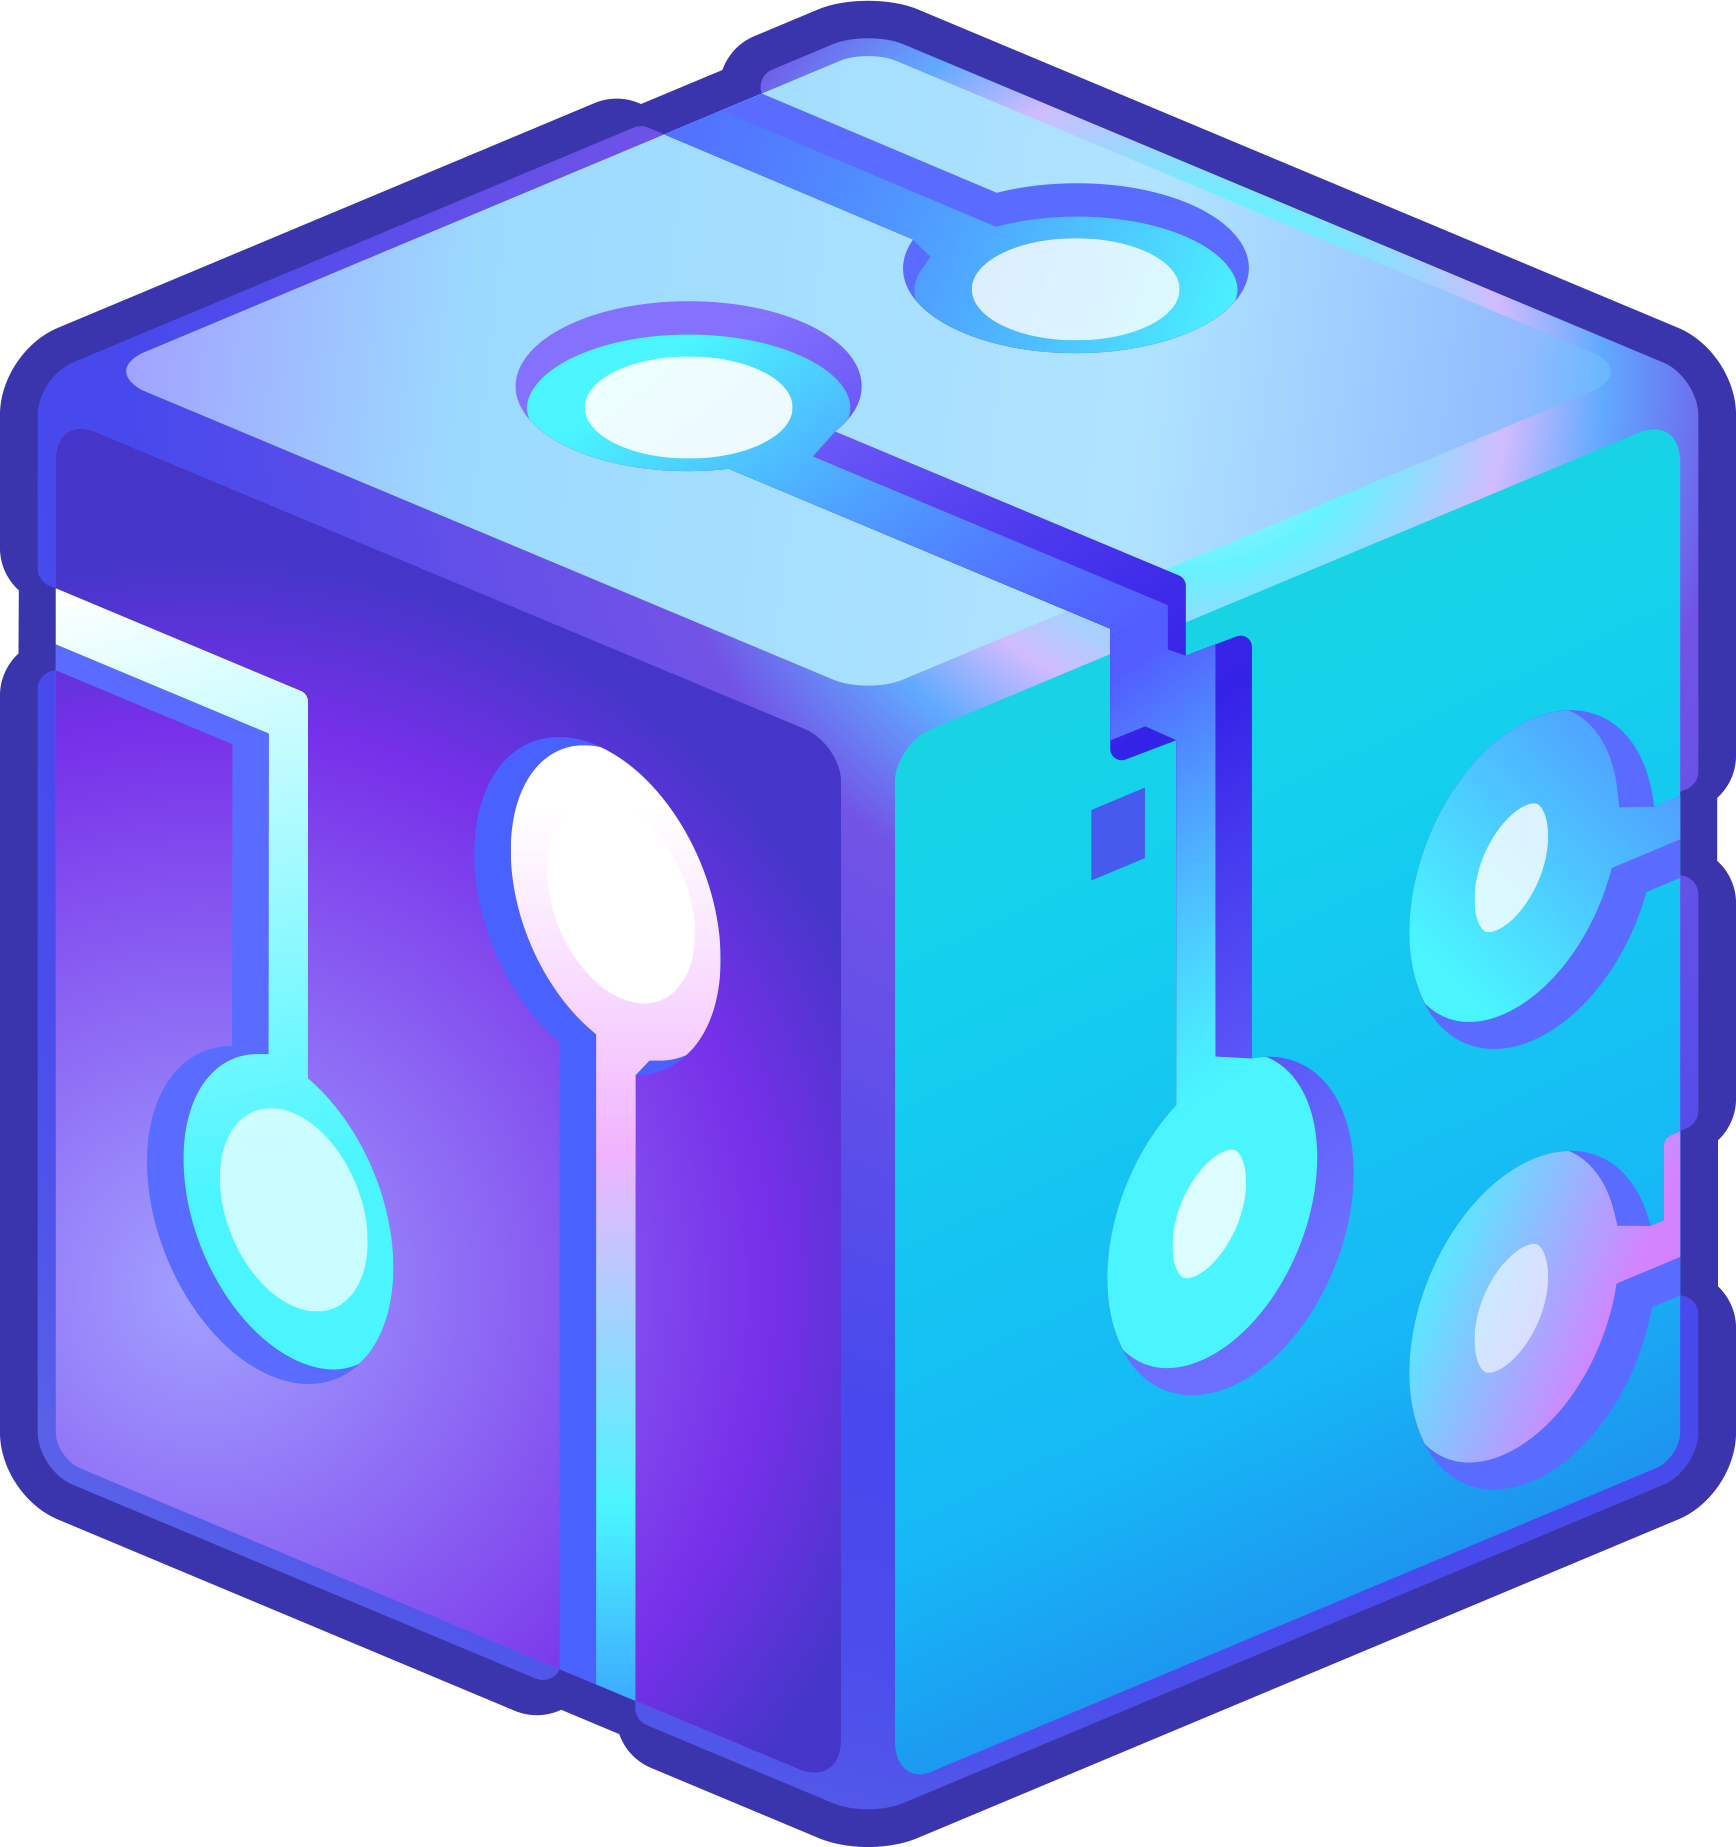 Cube codes. Куб код. Kirby Cube. Кювр код кубик. Code Cube фирма.